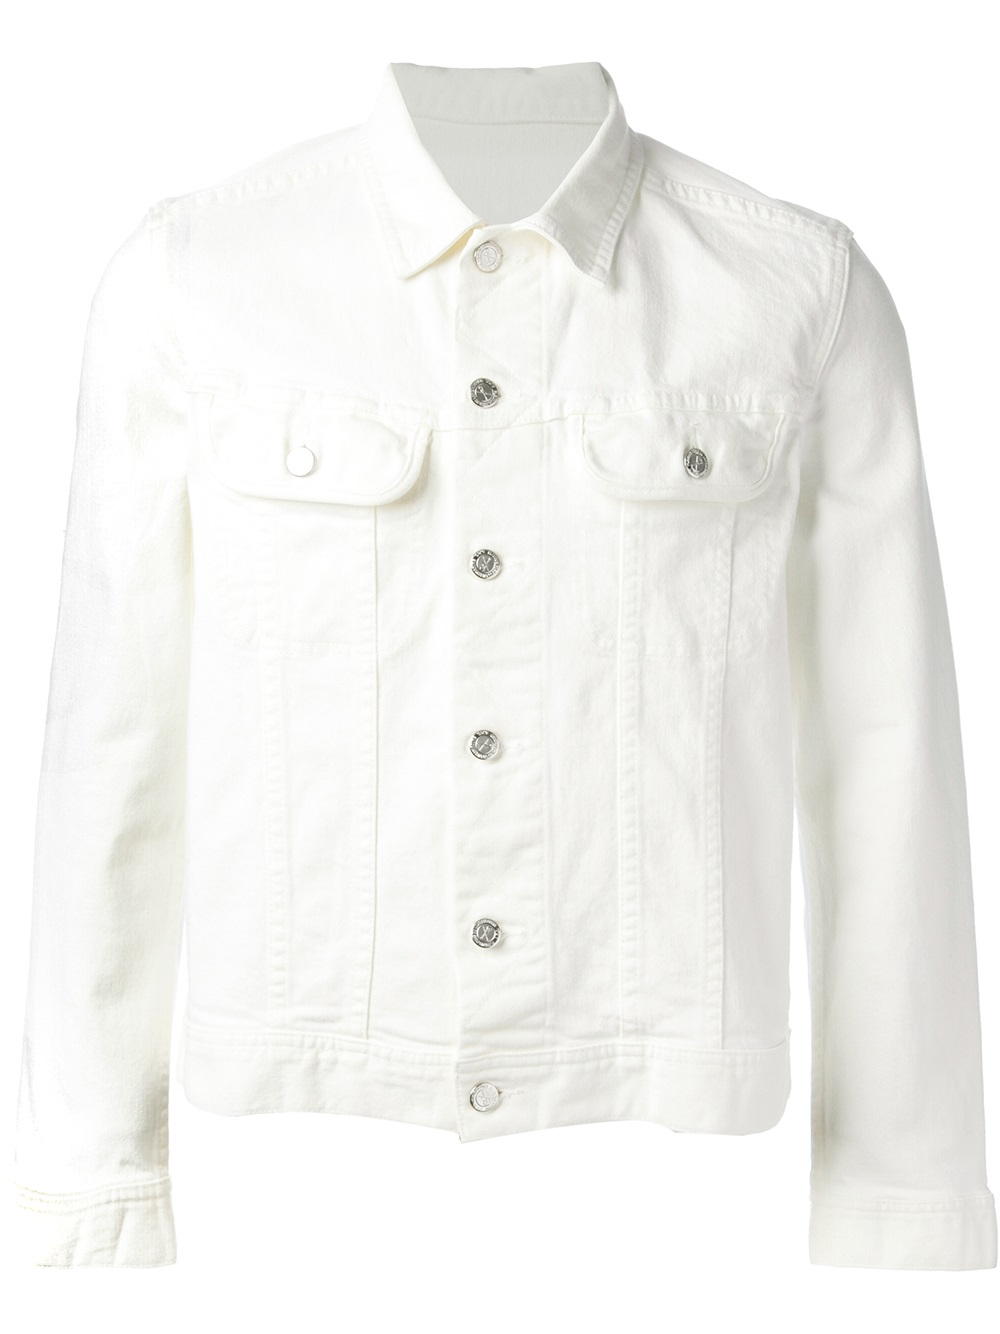 Lyst - A.P.C. Denim Jacket in White for Men